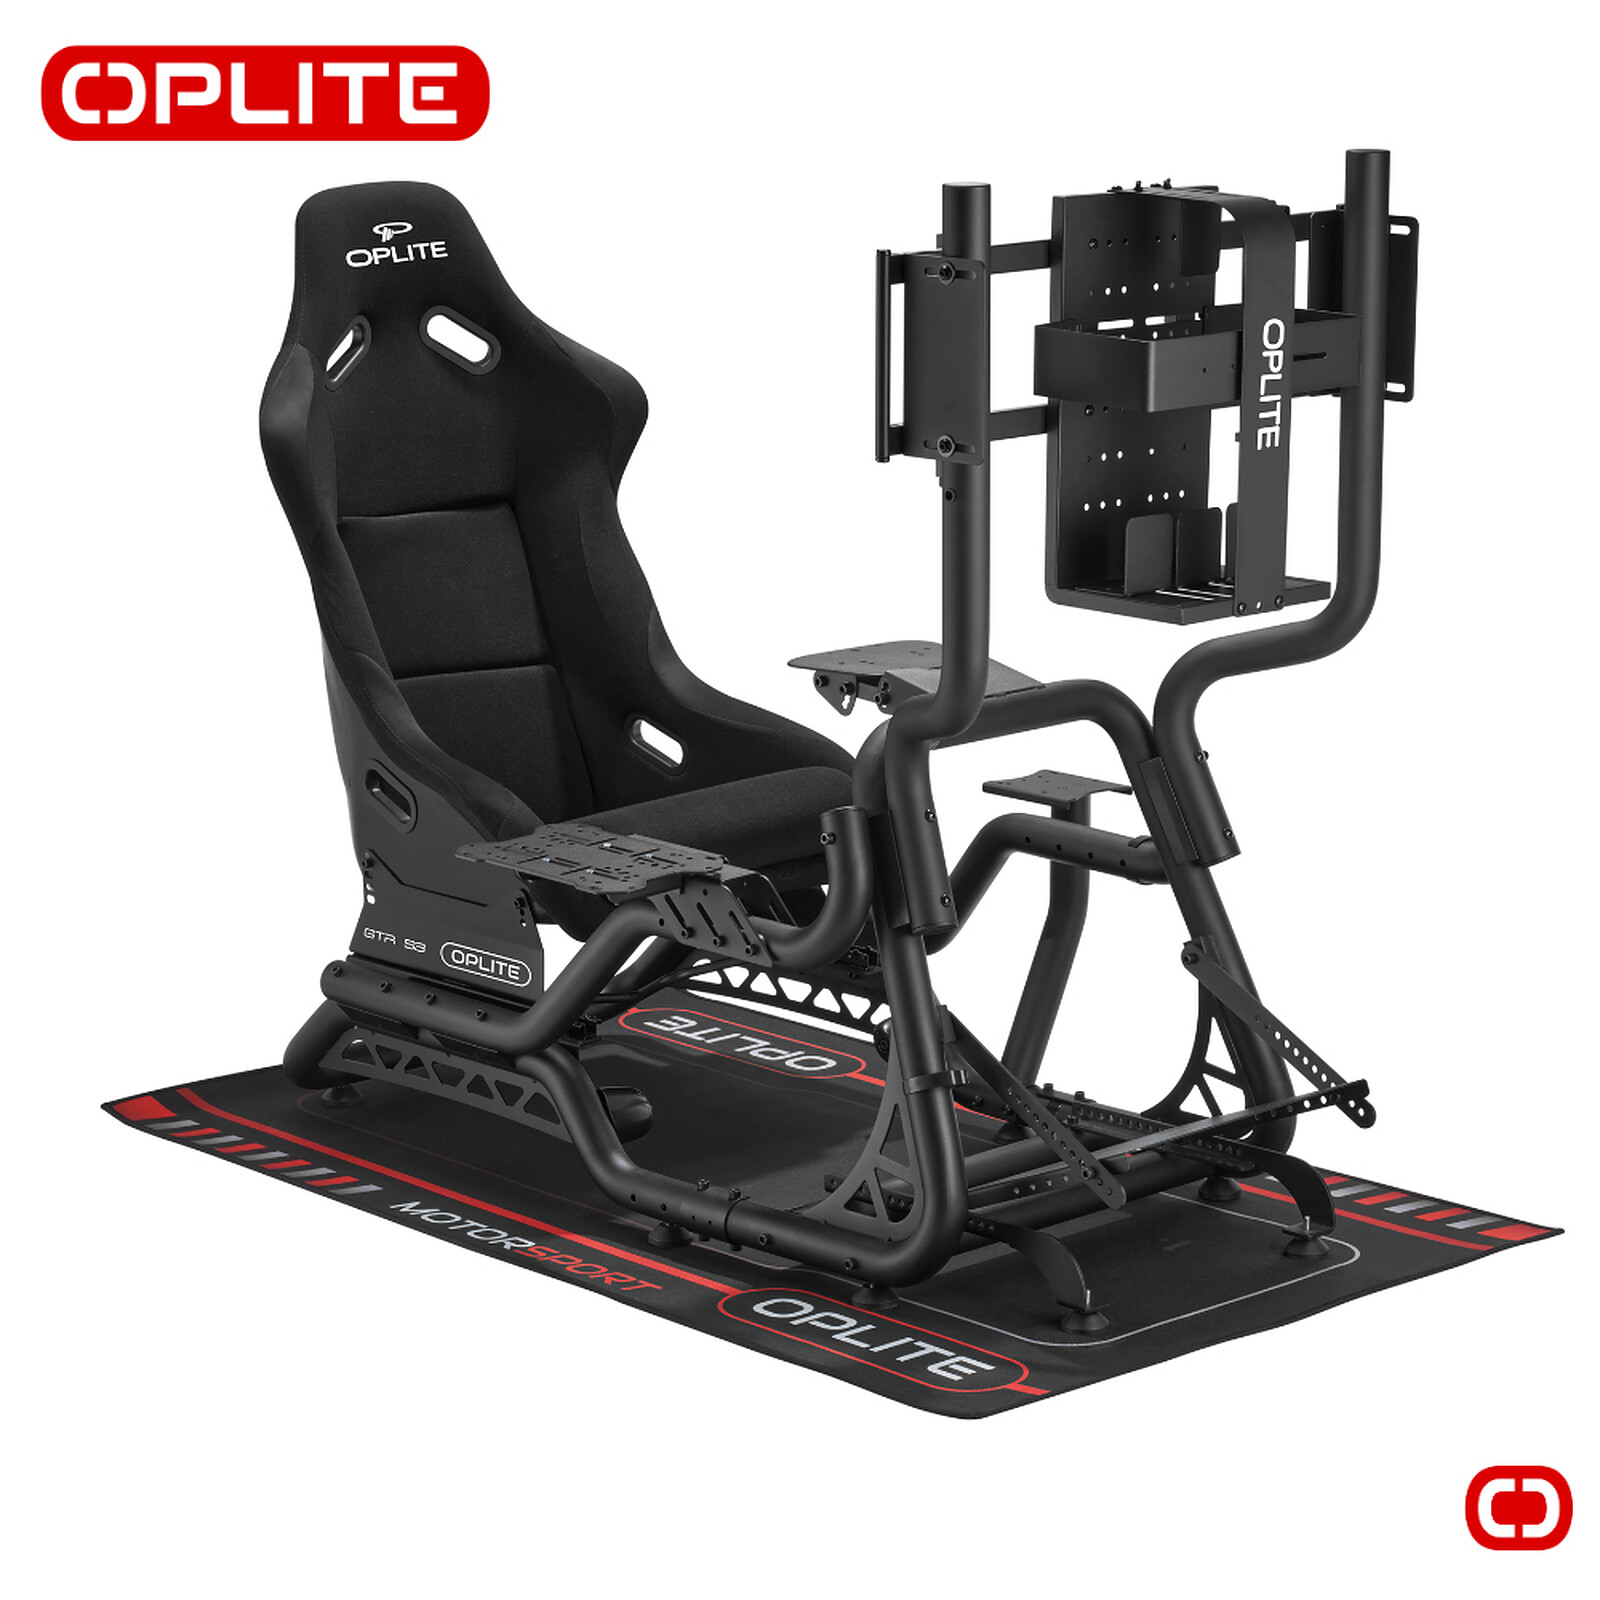 OPLITE GTR S8 Elite - Jaune - Simulation automobile OPLITE sur